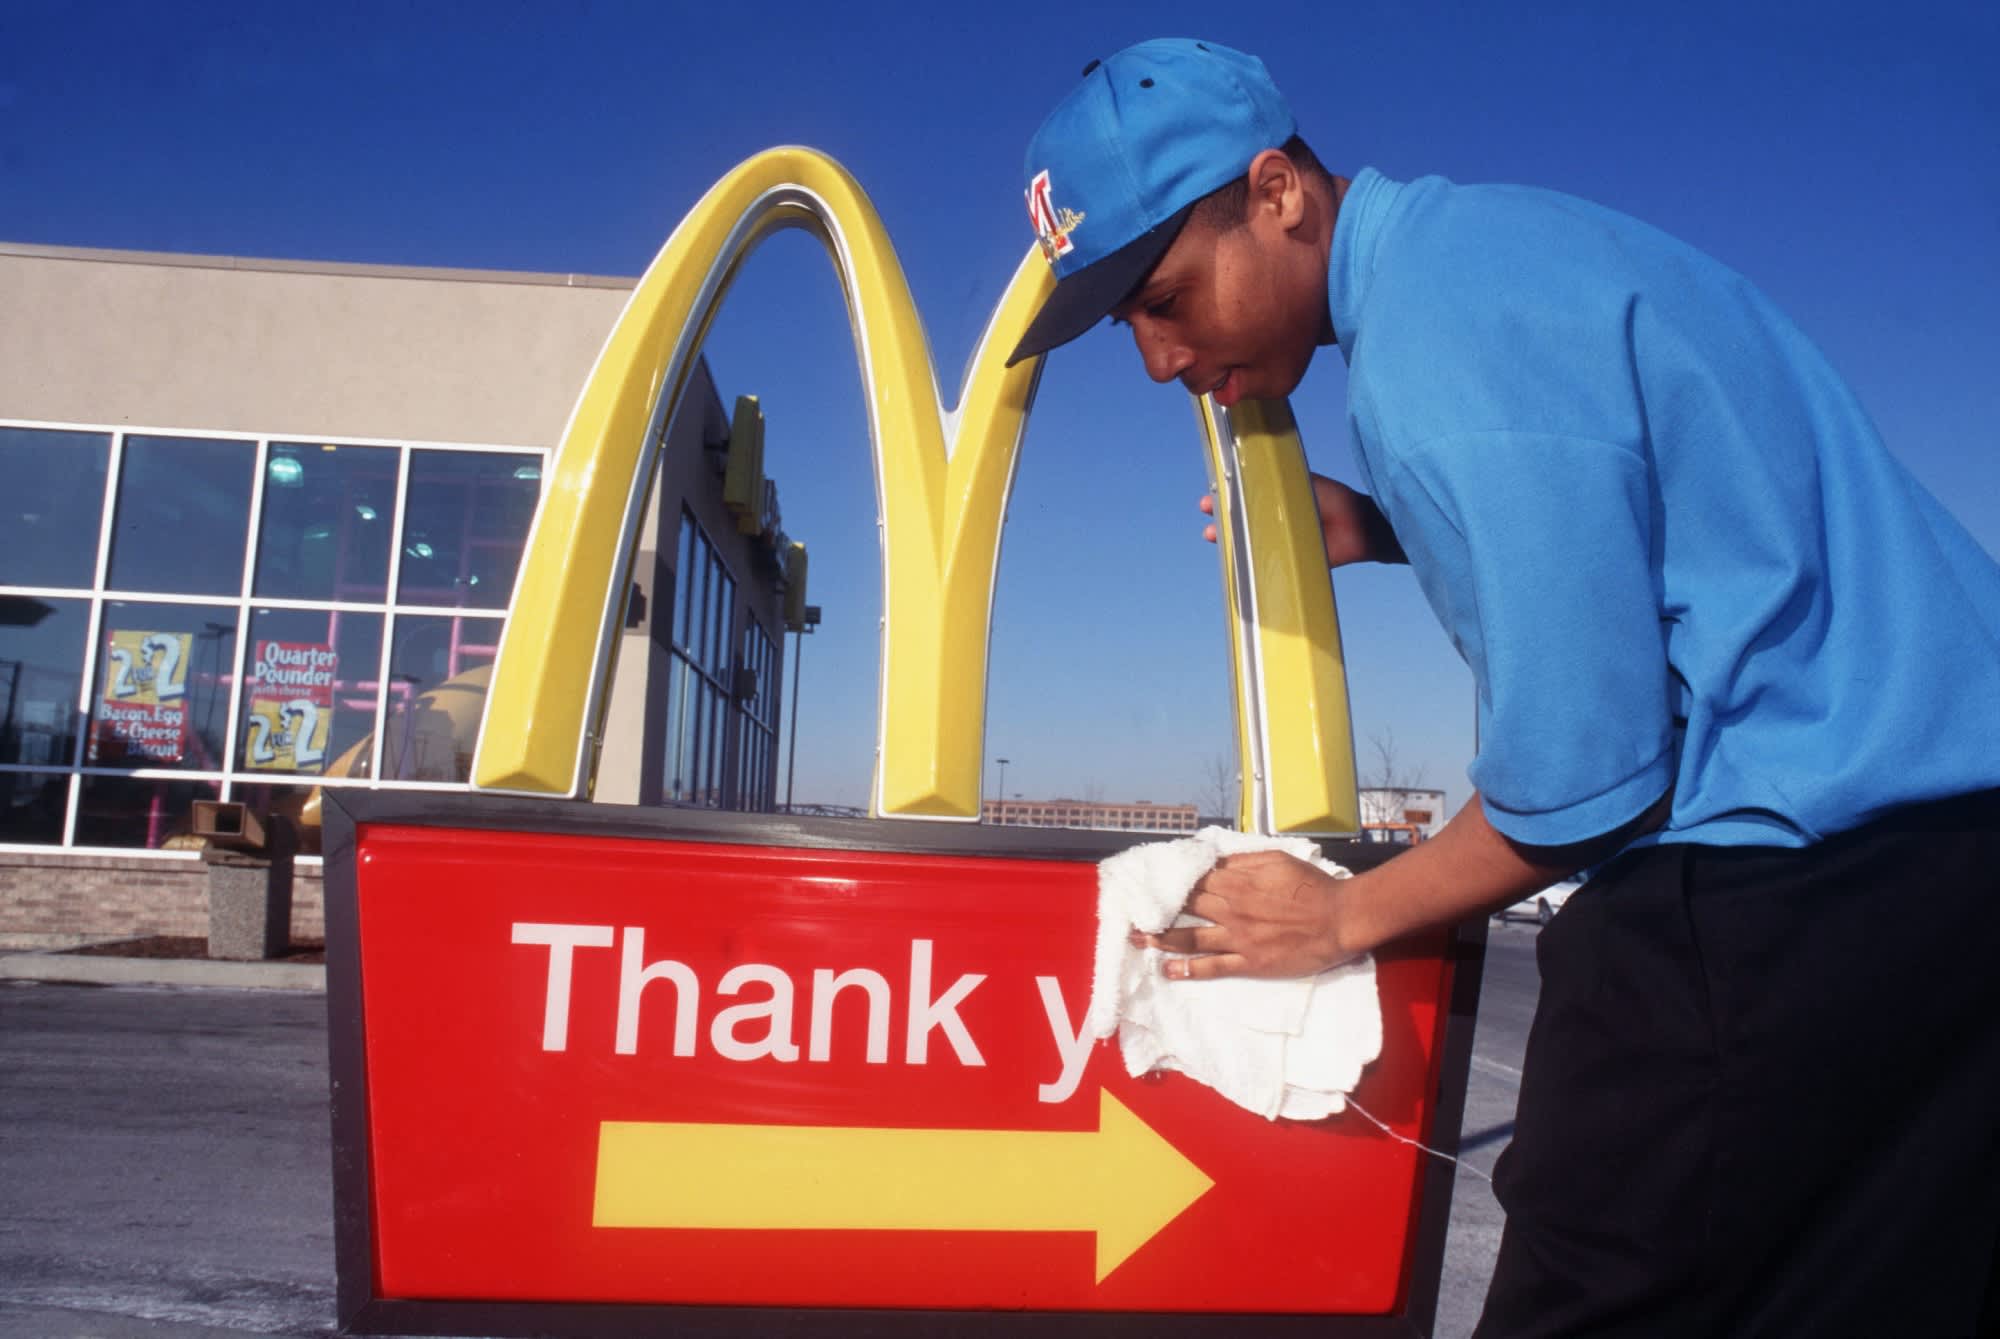 McDonald’s taps new CMO, international market leaders in executive shuffle